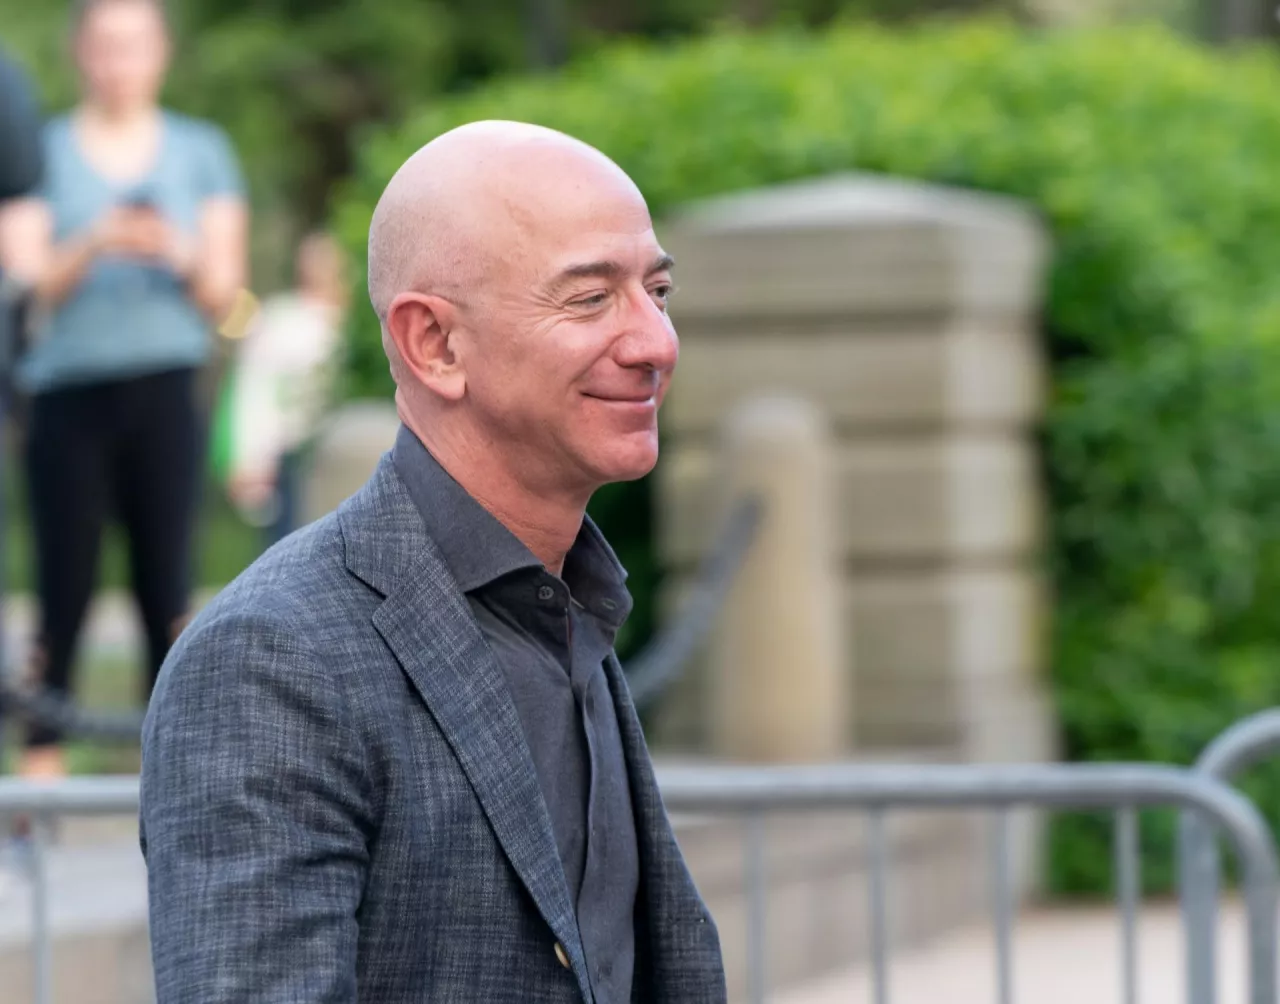 Jeff Bezos (fot. lev radin / Shutterstock.com)